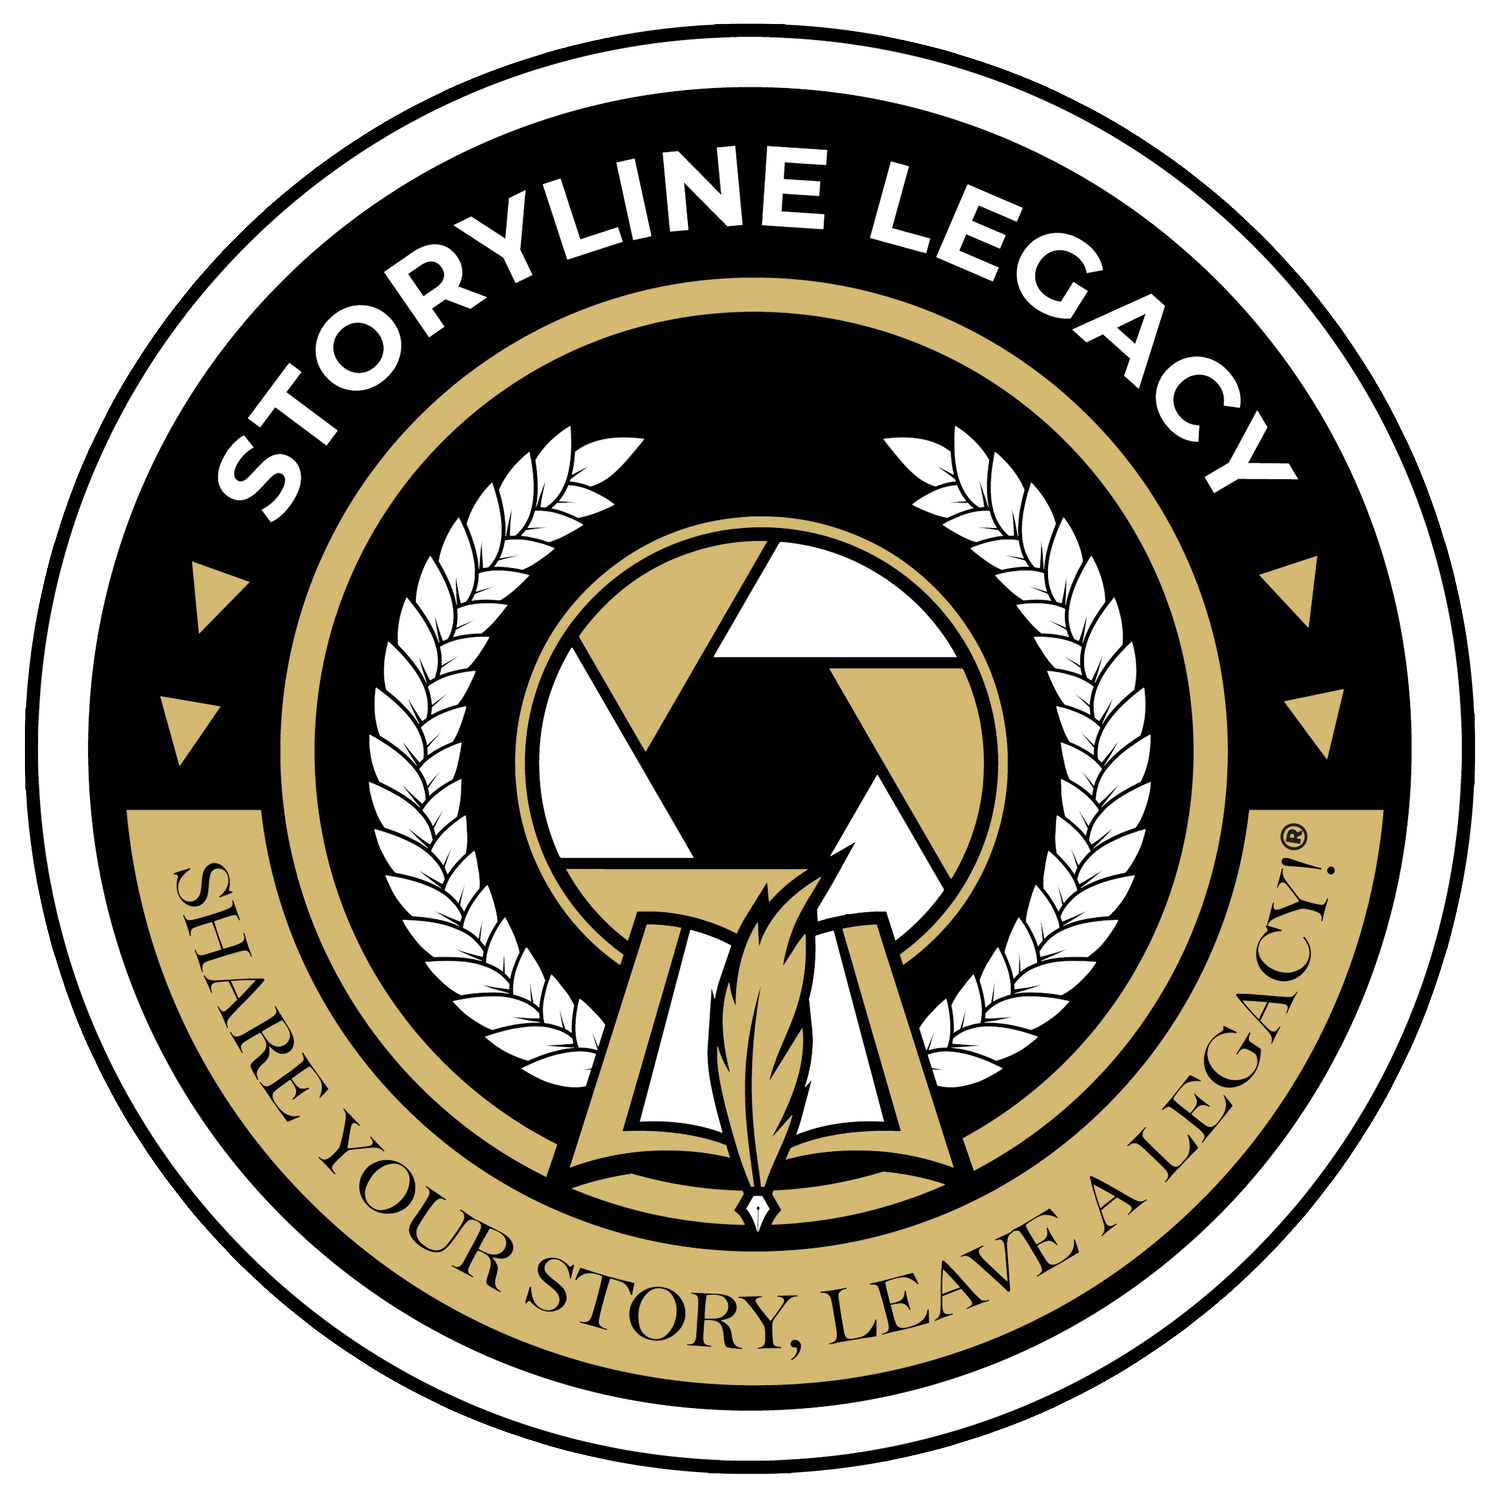 Storyline Legacy Film Company